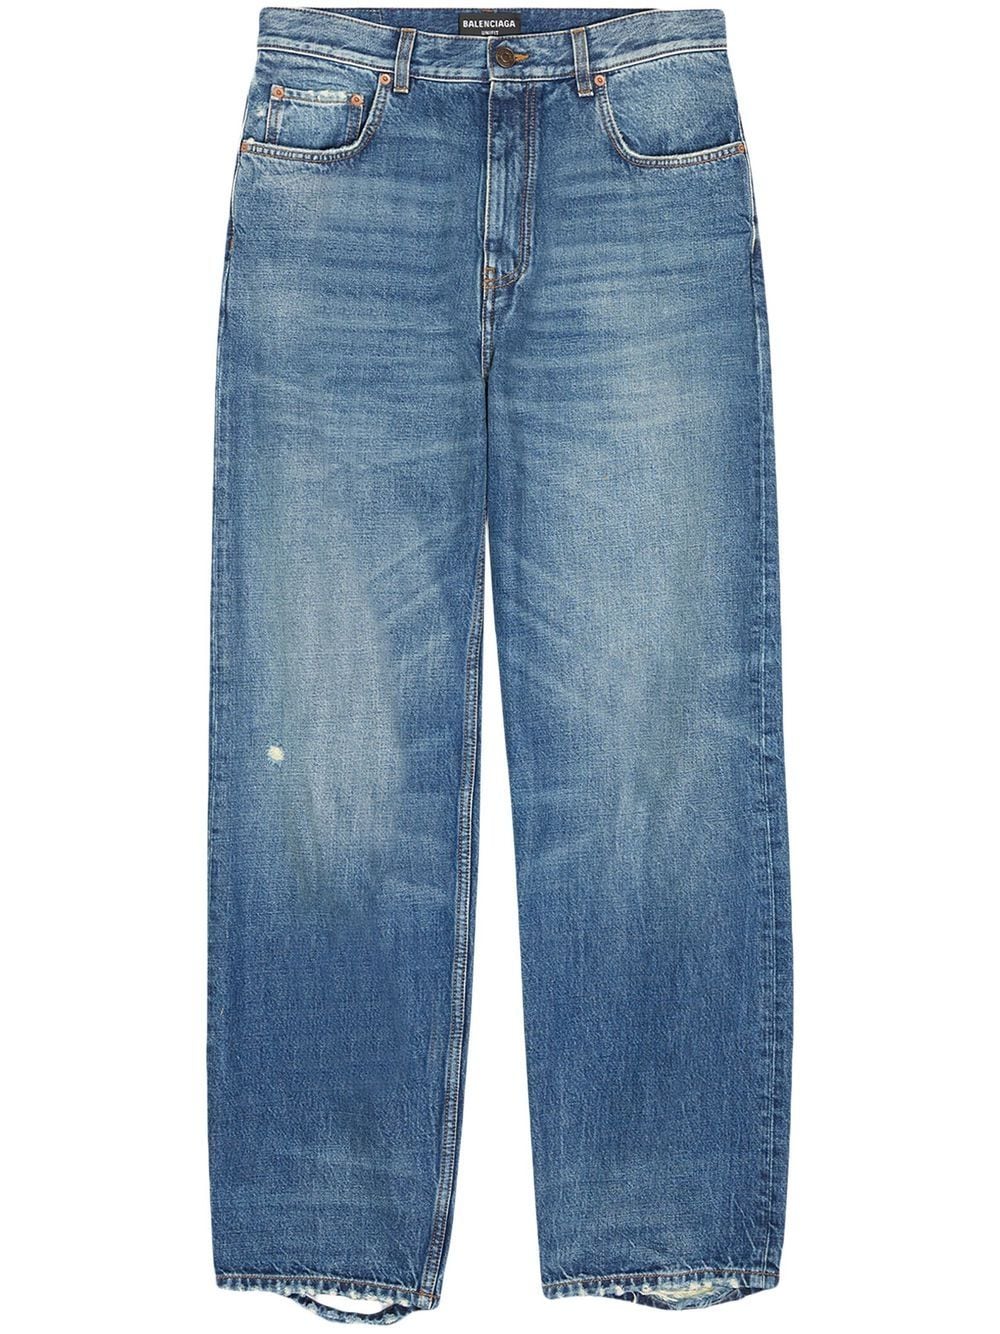 Balenciaga distressed straight-leg jeans - Blue